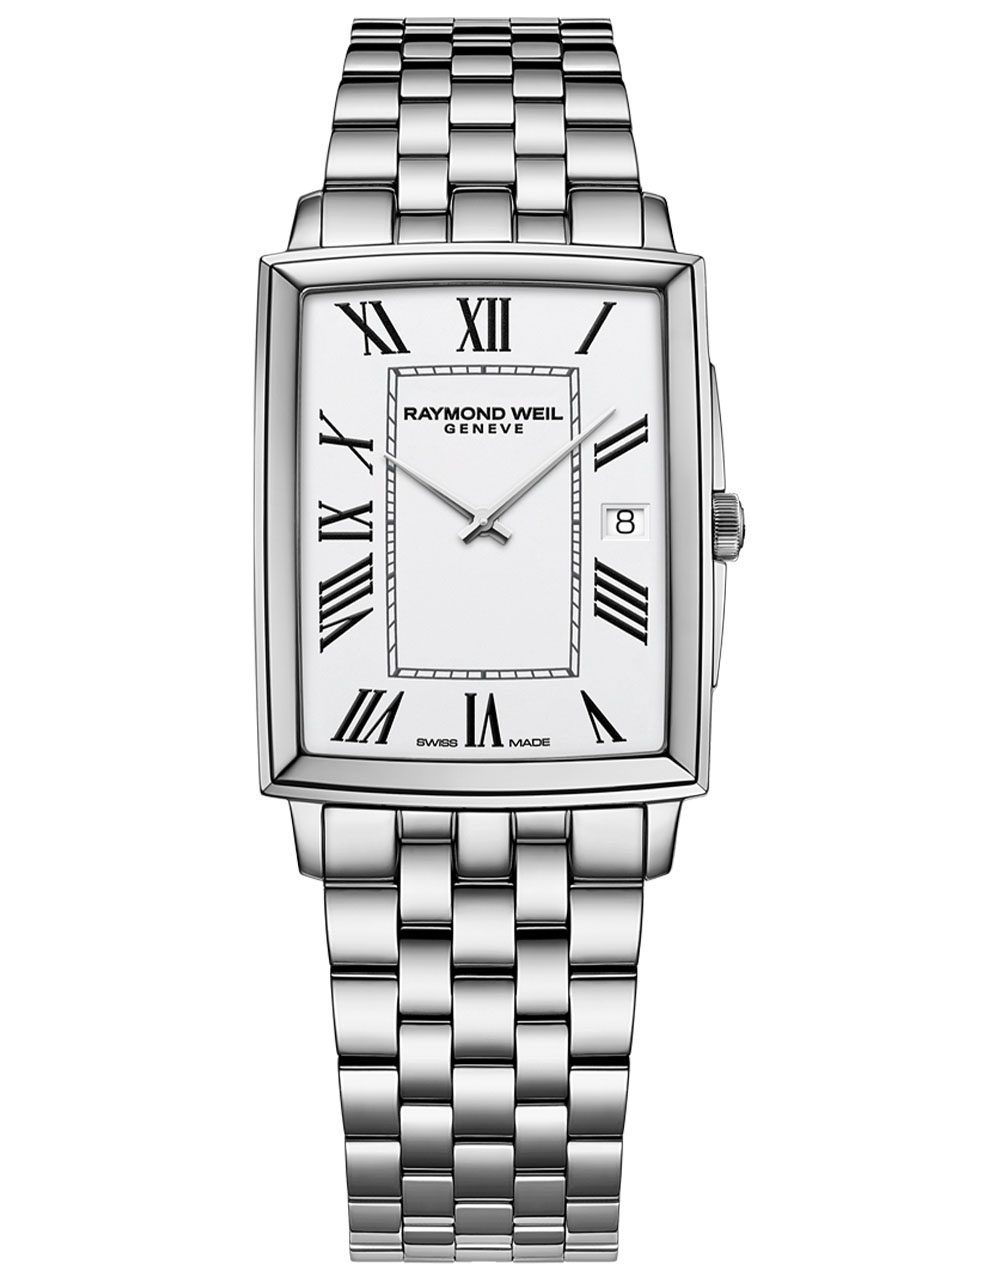 Raymond WeilToccata Men's Classic Rectangular Stainless Steel Watch, 37 x 29 mm (5425-ST-00300)
Stainless steel bracelet, White dial, Black Roman numerals